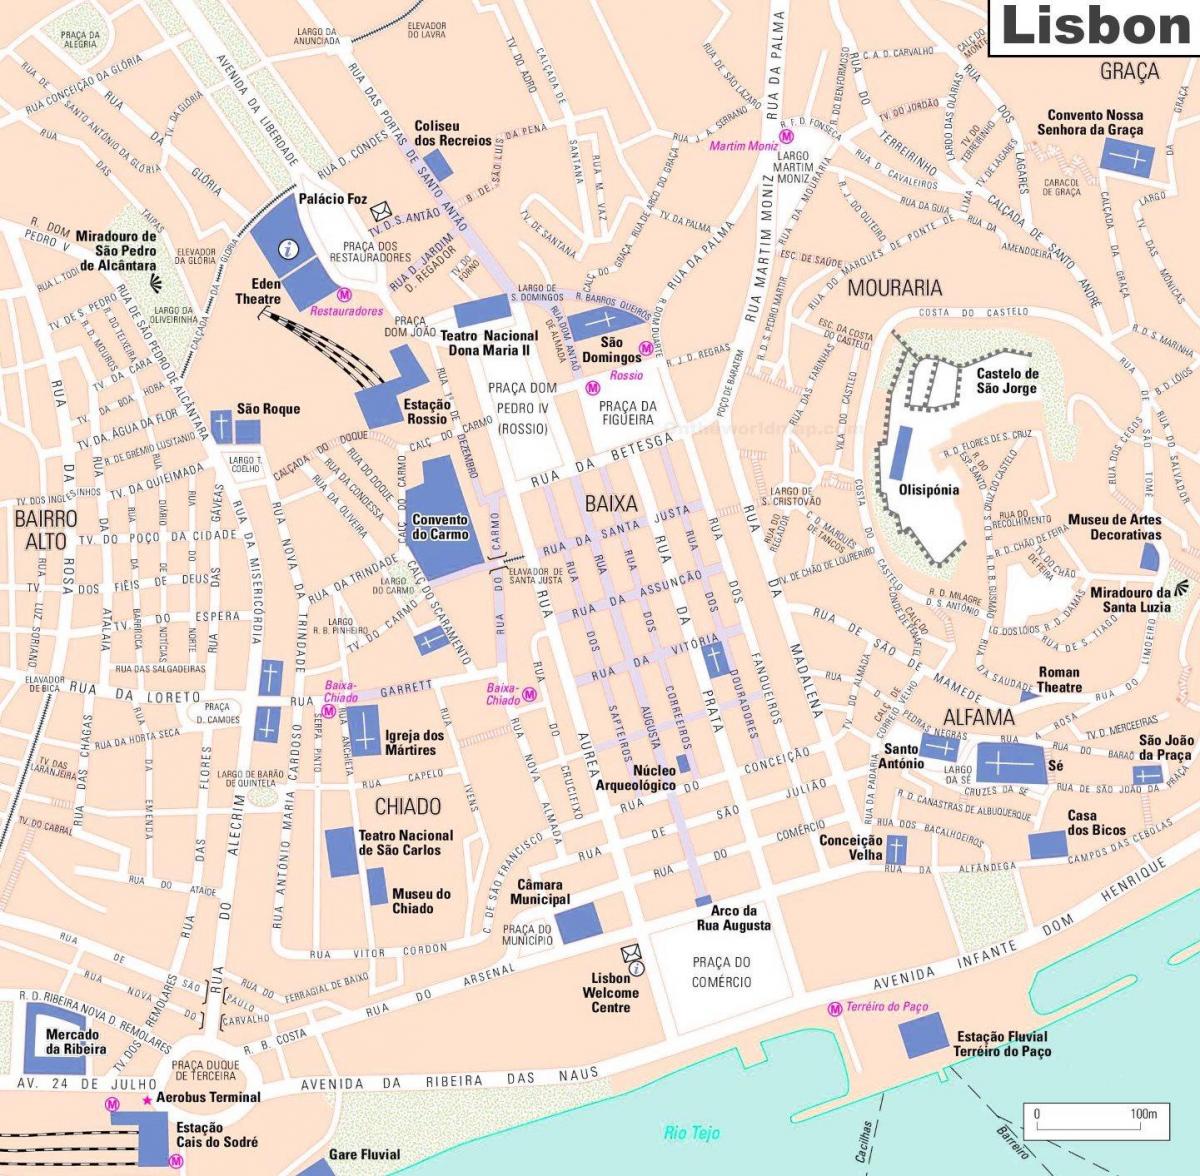 Lugares de interés de lisboa mapa Lisboa top atracciones en el mapa Portugal